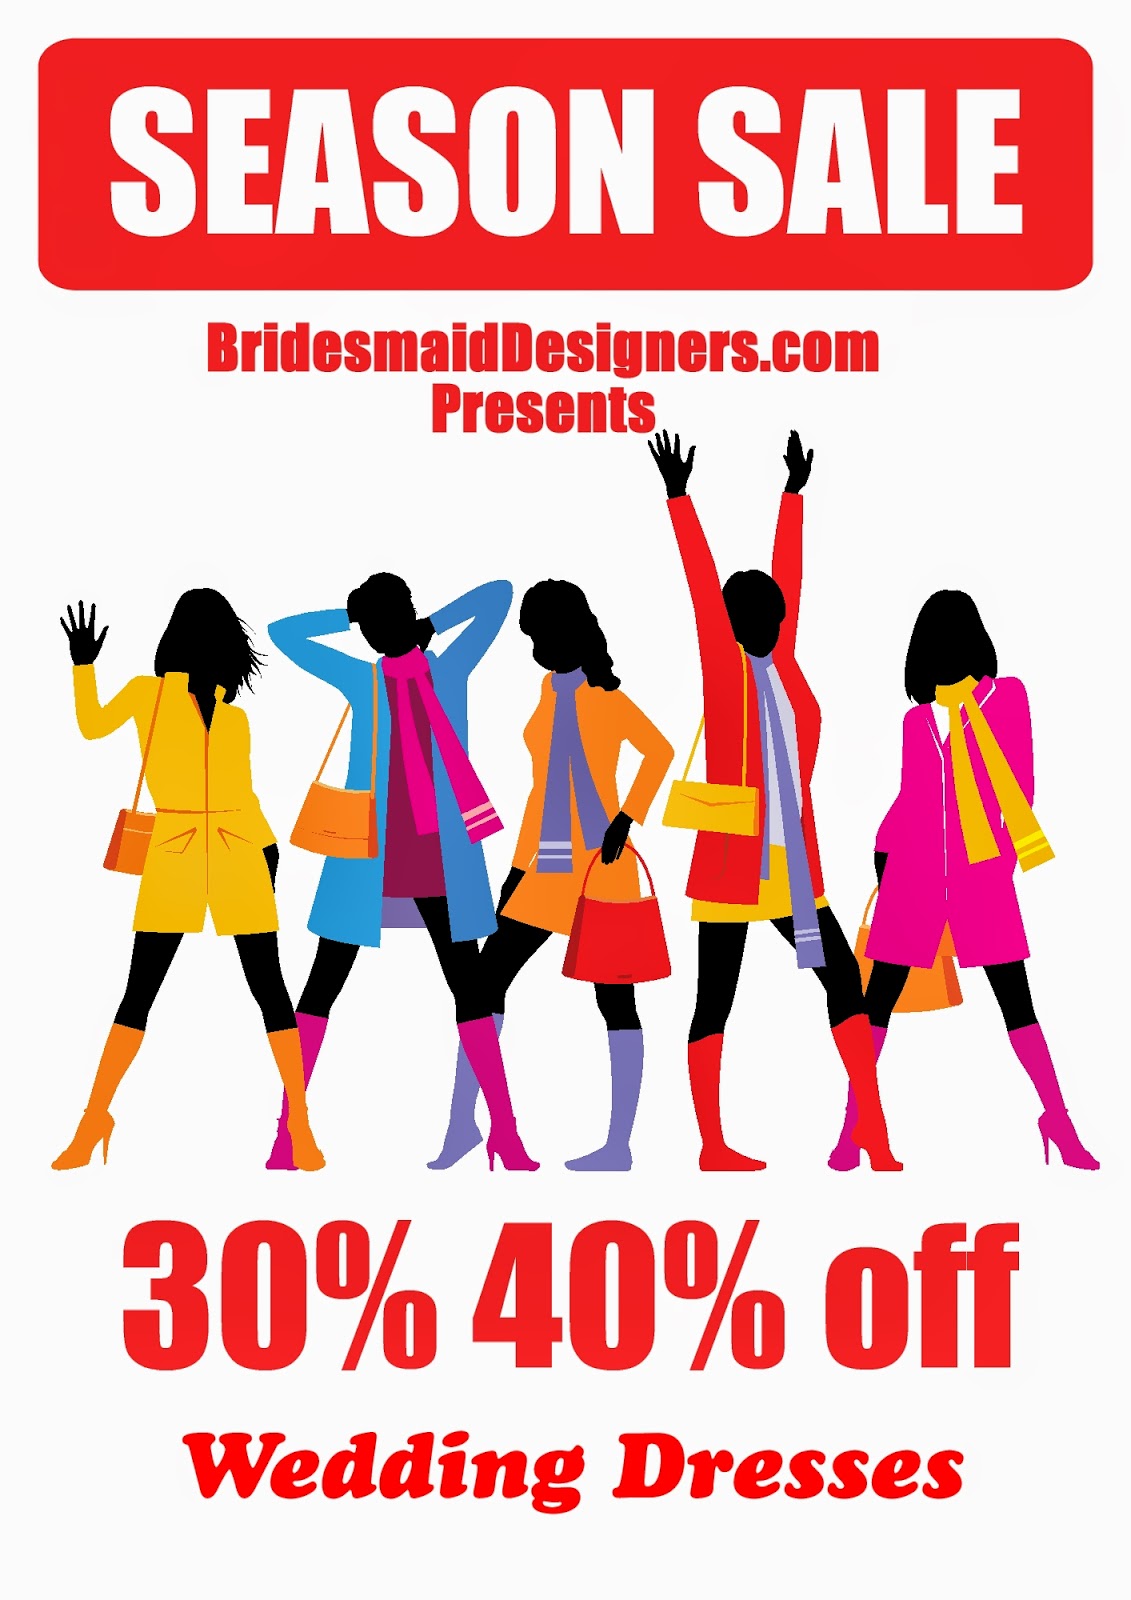 http://www.bridesmaiddesigners.com